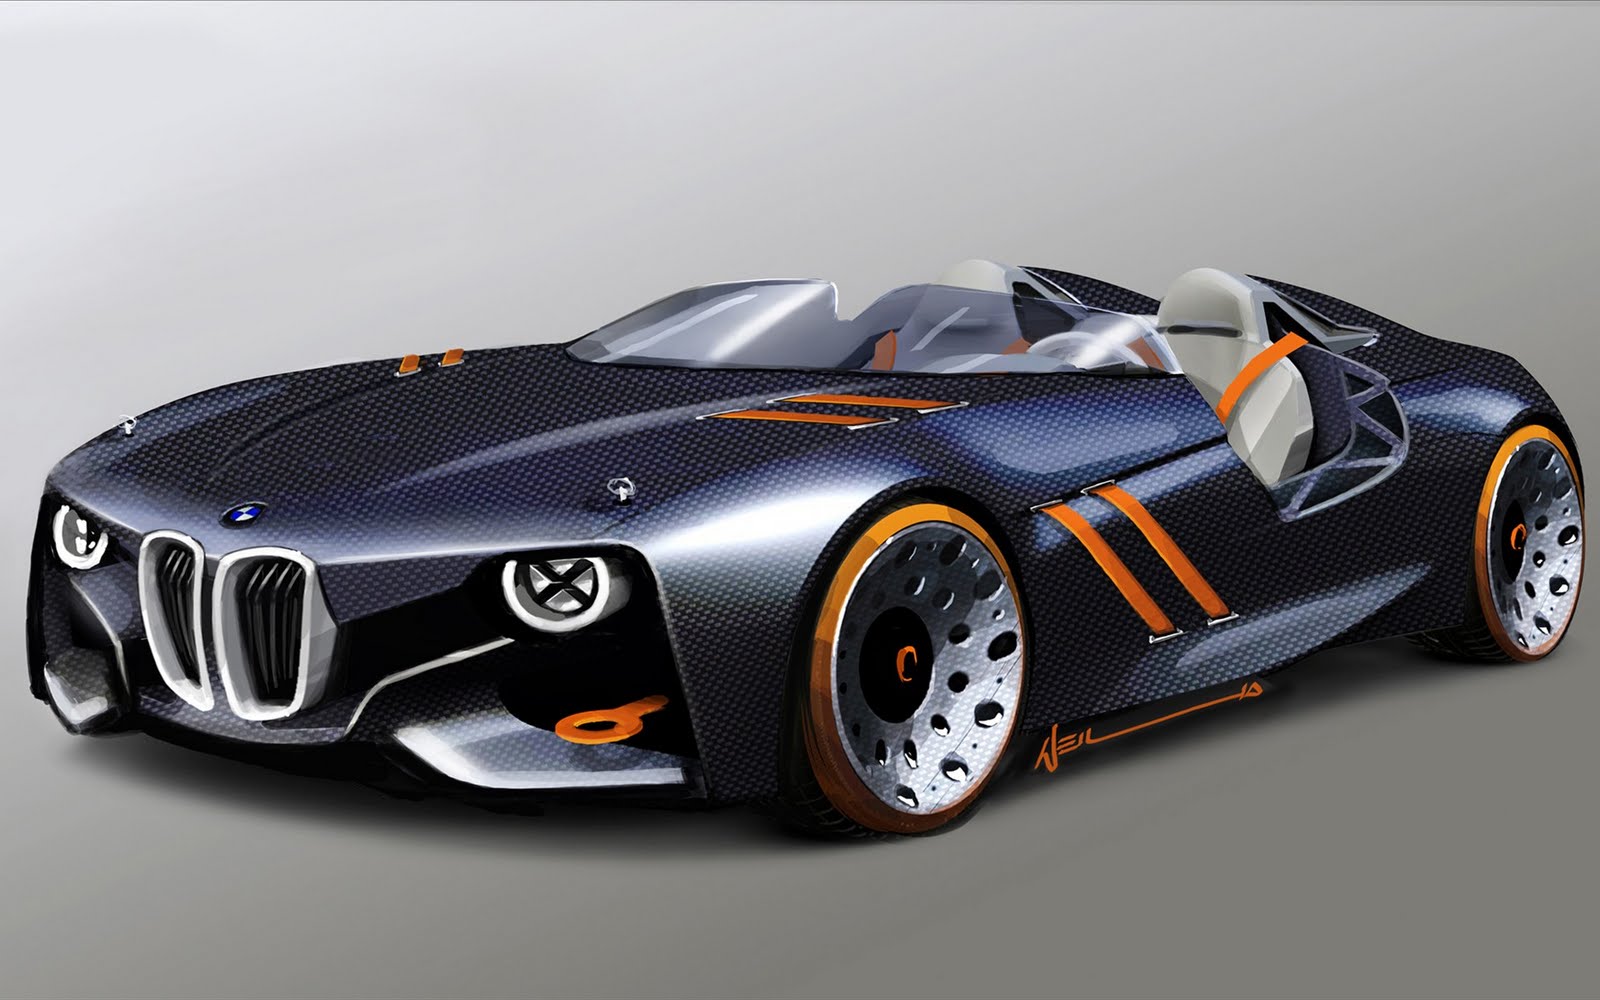 BANCO DE IM\u00c1GENES: Colecci\u00f3n de autos conceptuales  Concept Cars